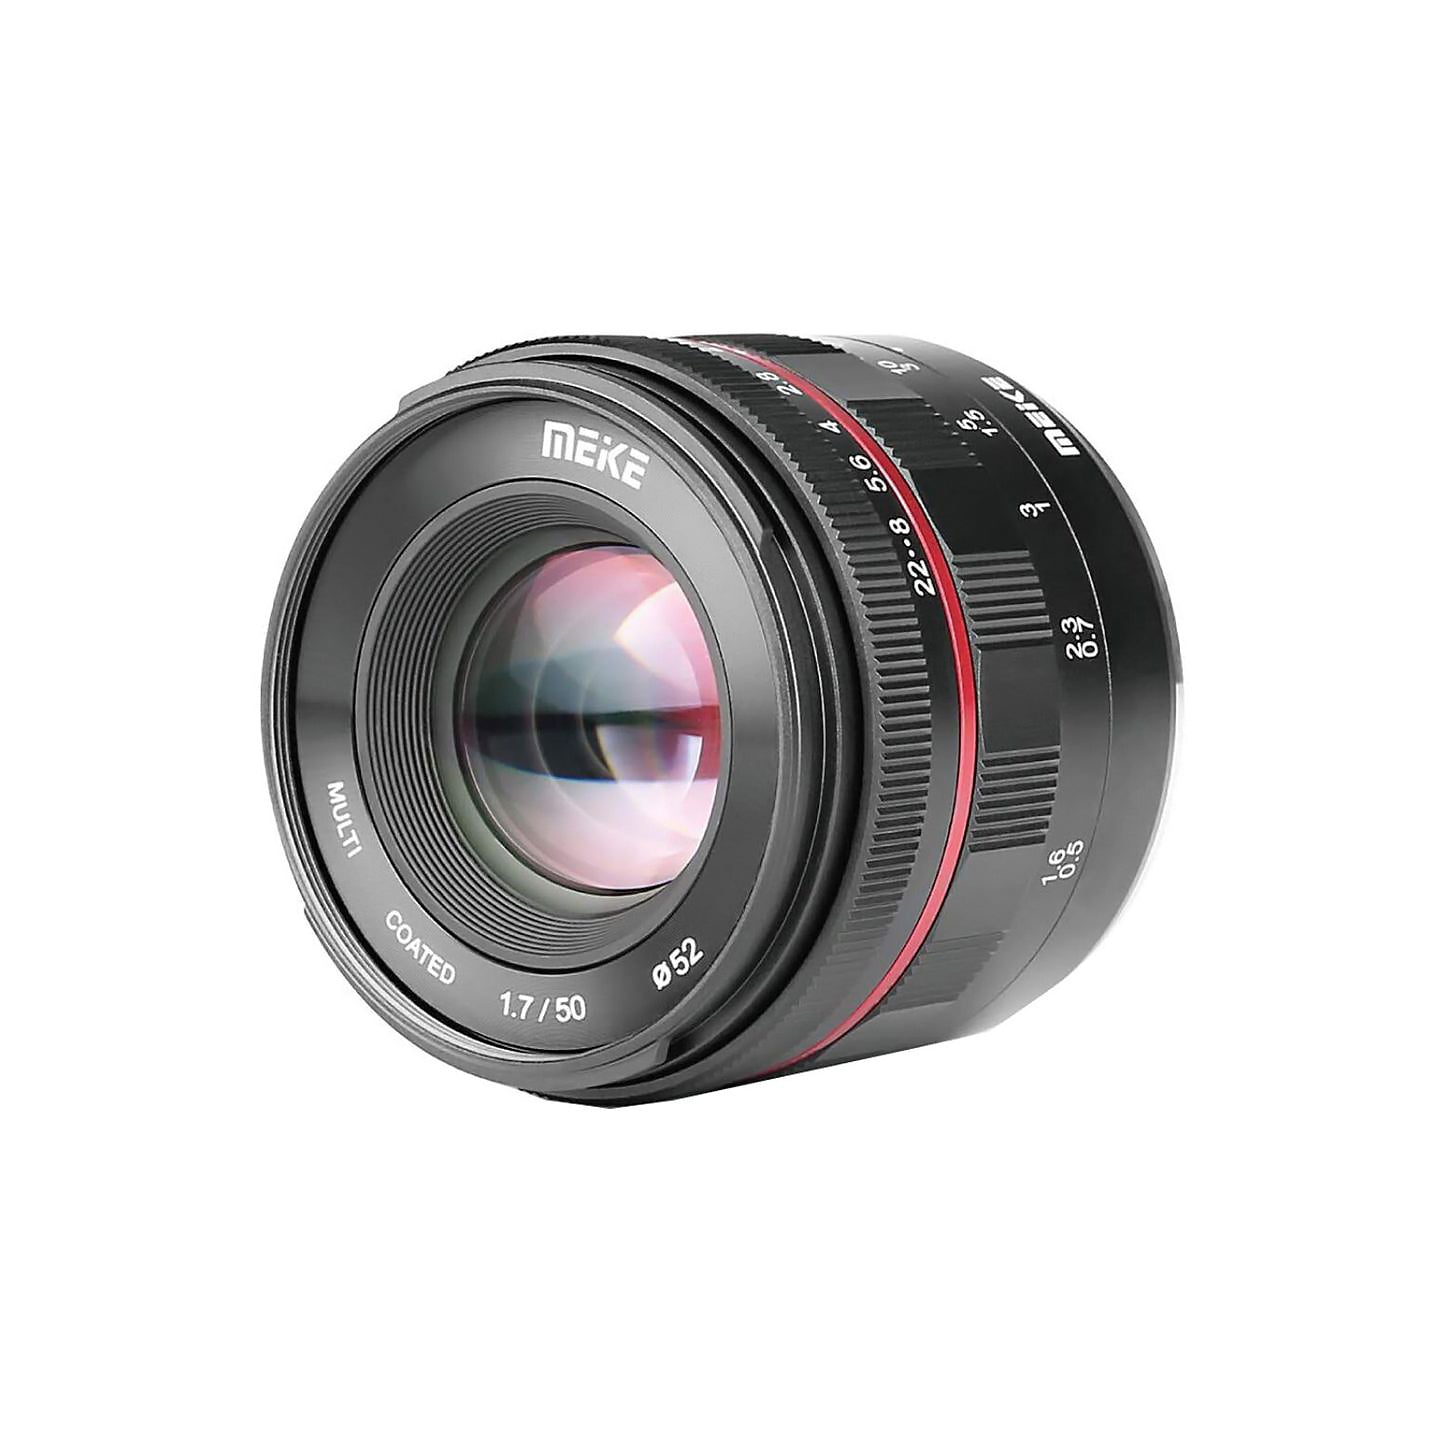 Meike 50mm f/1.7 Full Frame Prime Lens with Manual Focus Mode for